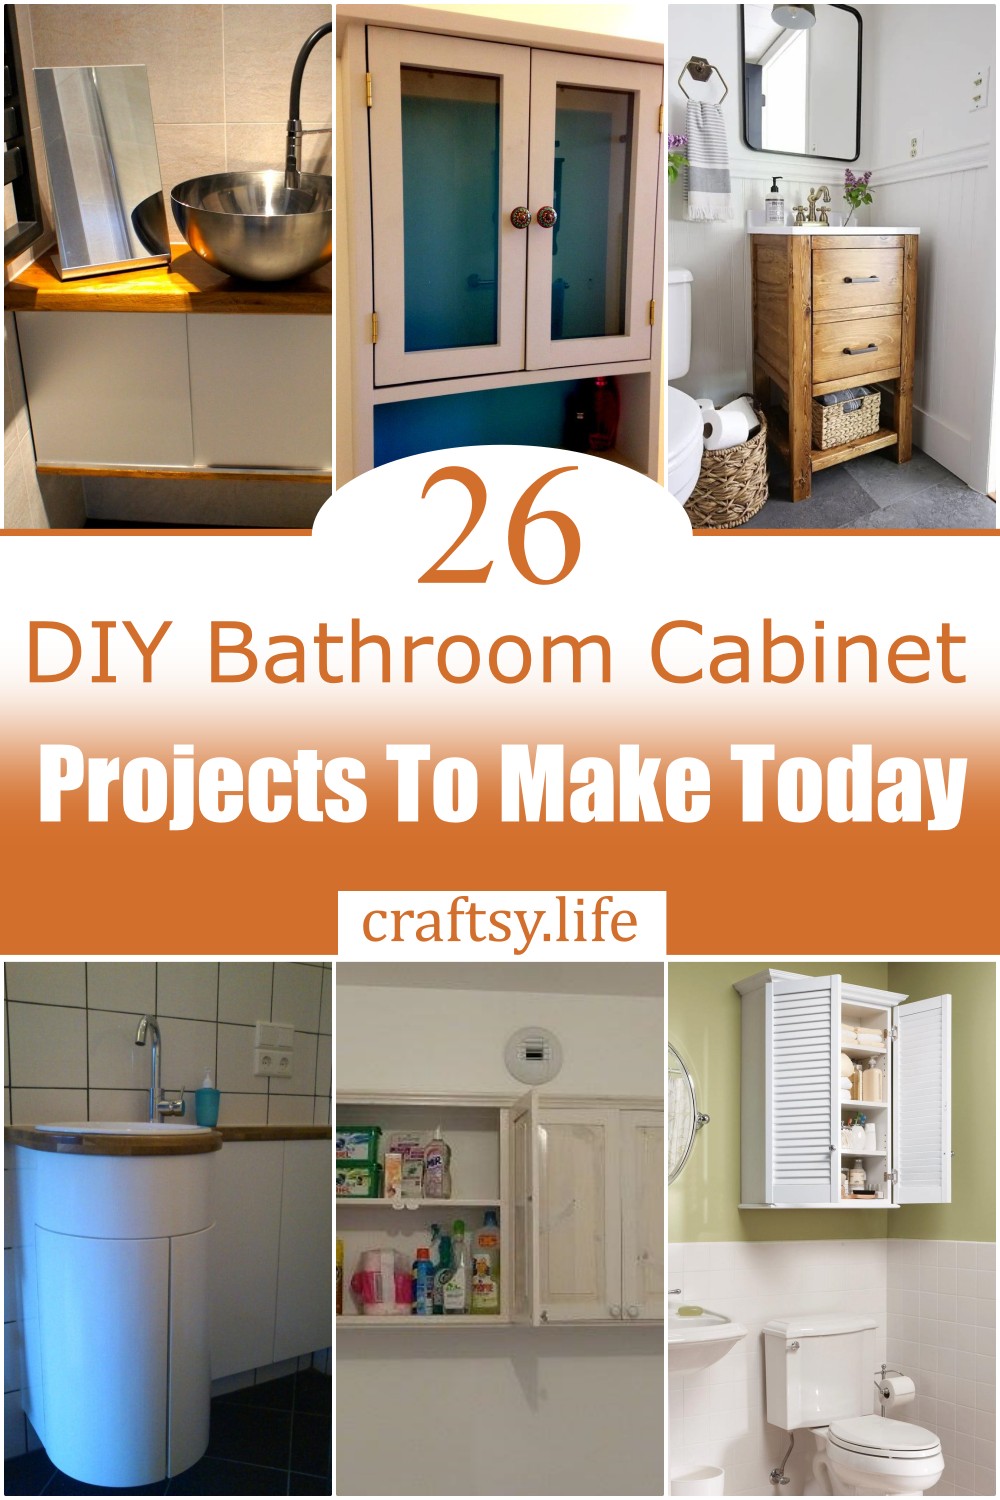 DIY Bathroom Cabinet Projects 1